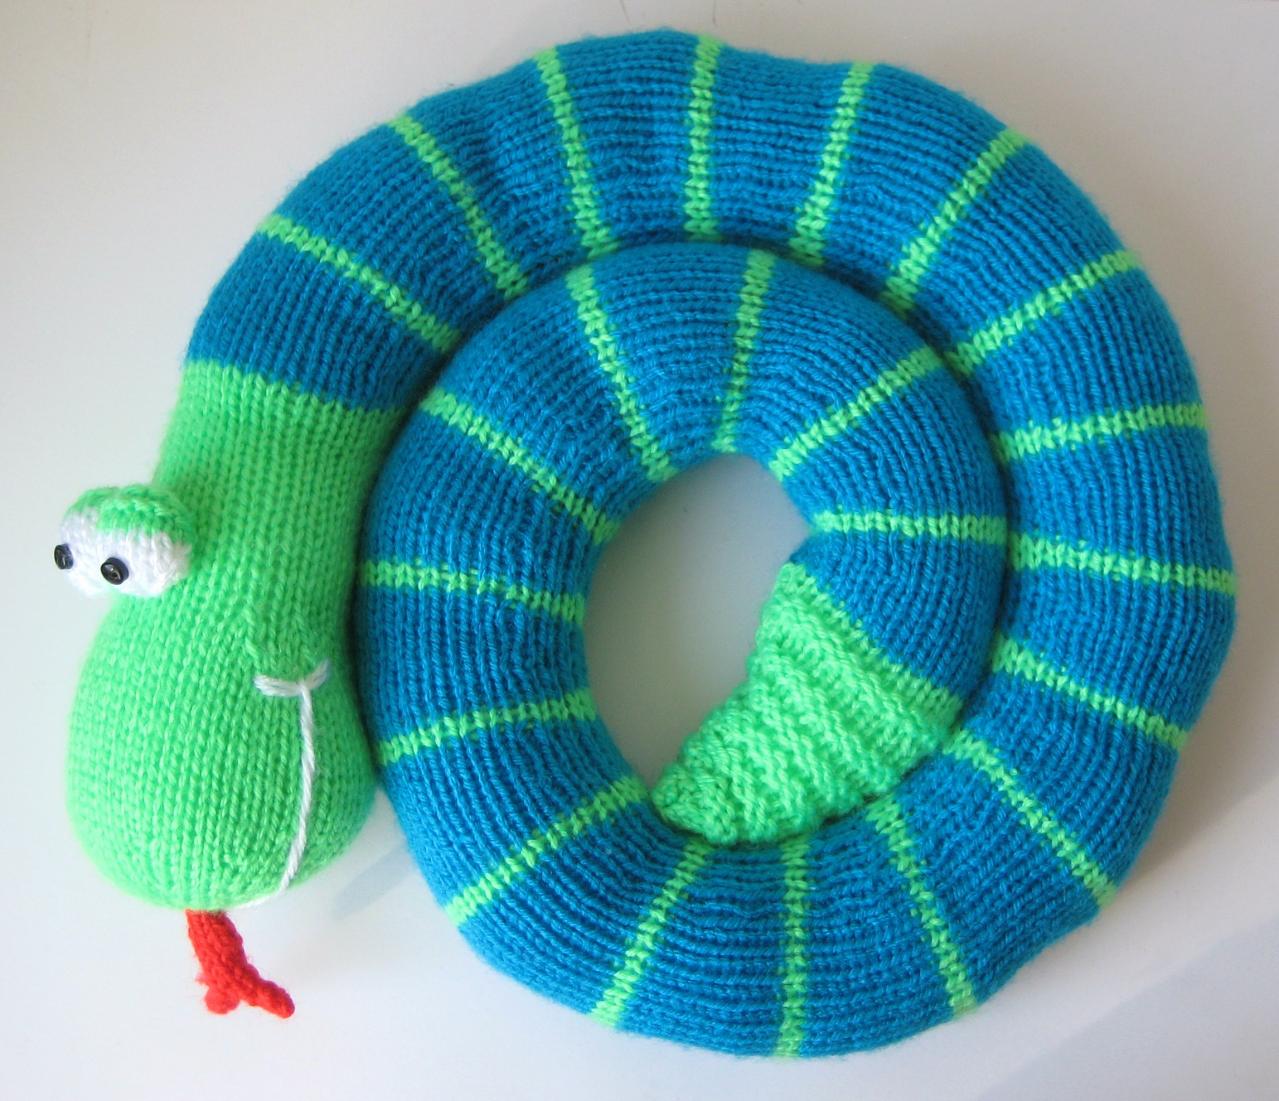 Twirly Snake Toy Knitting Pattern